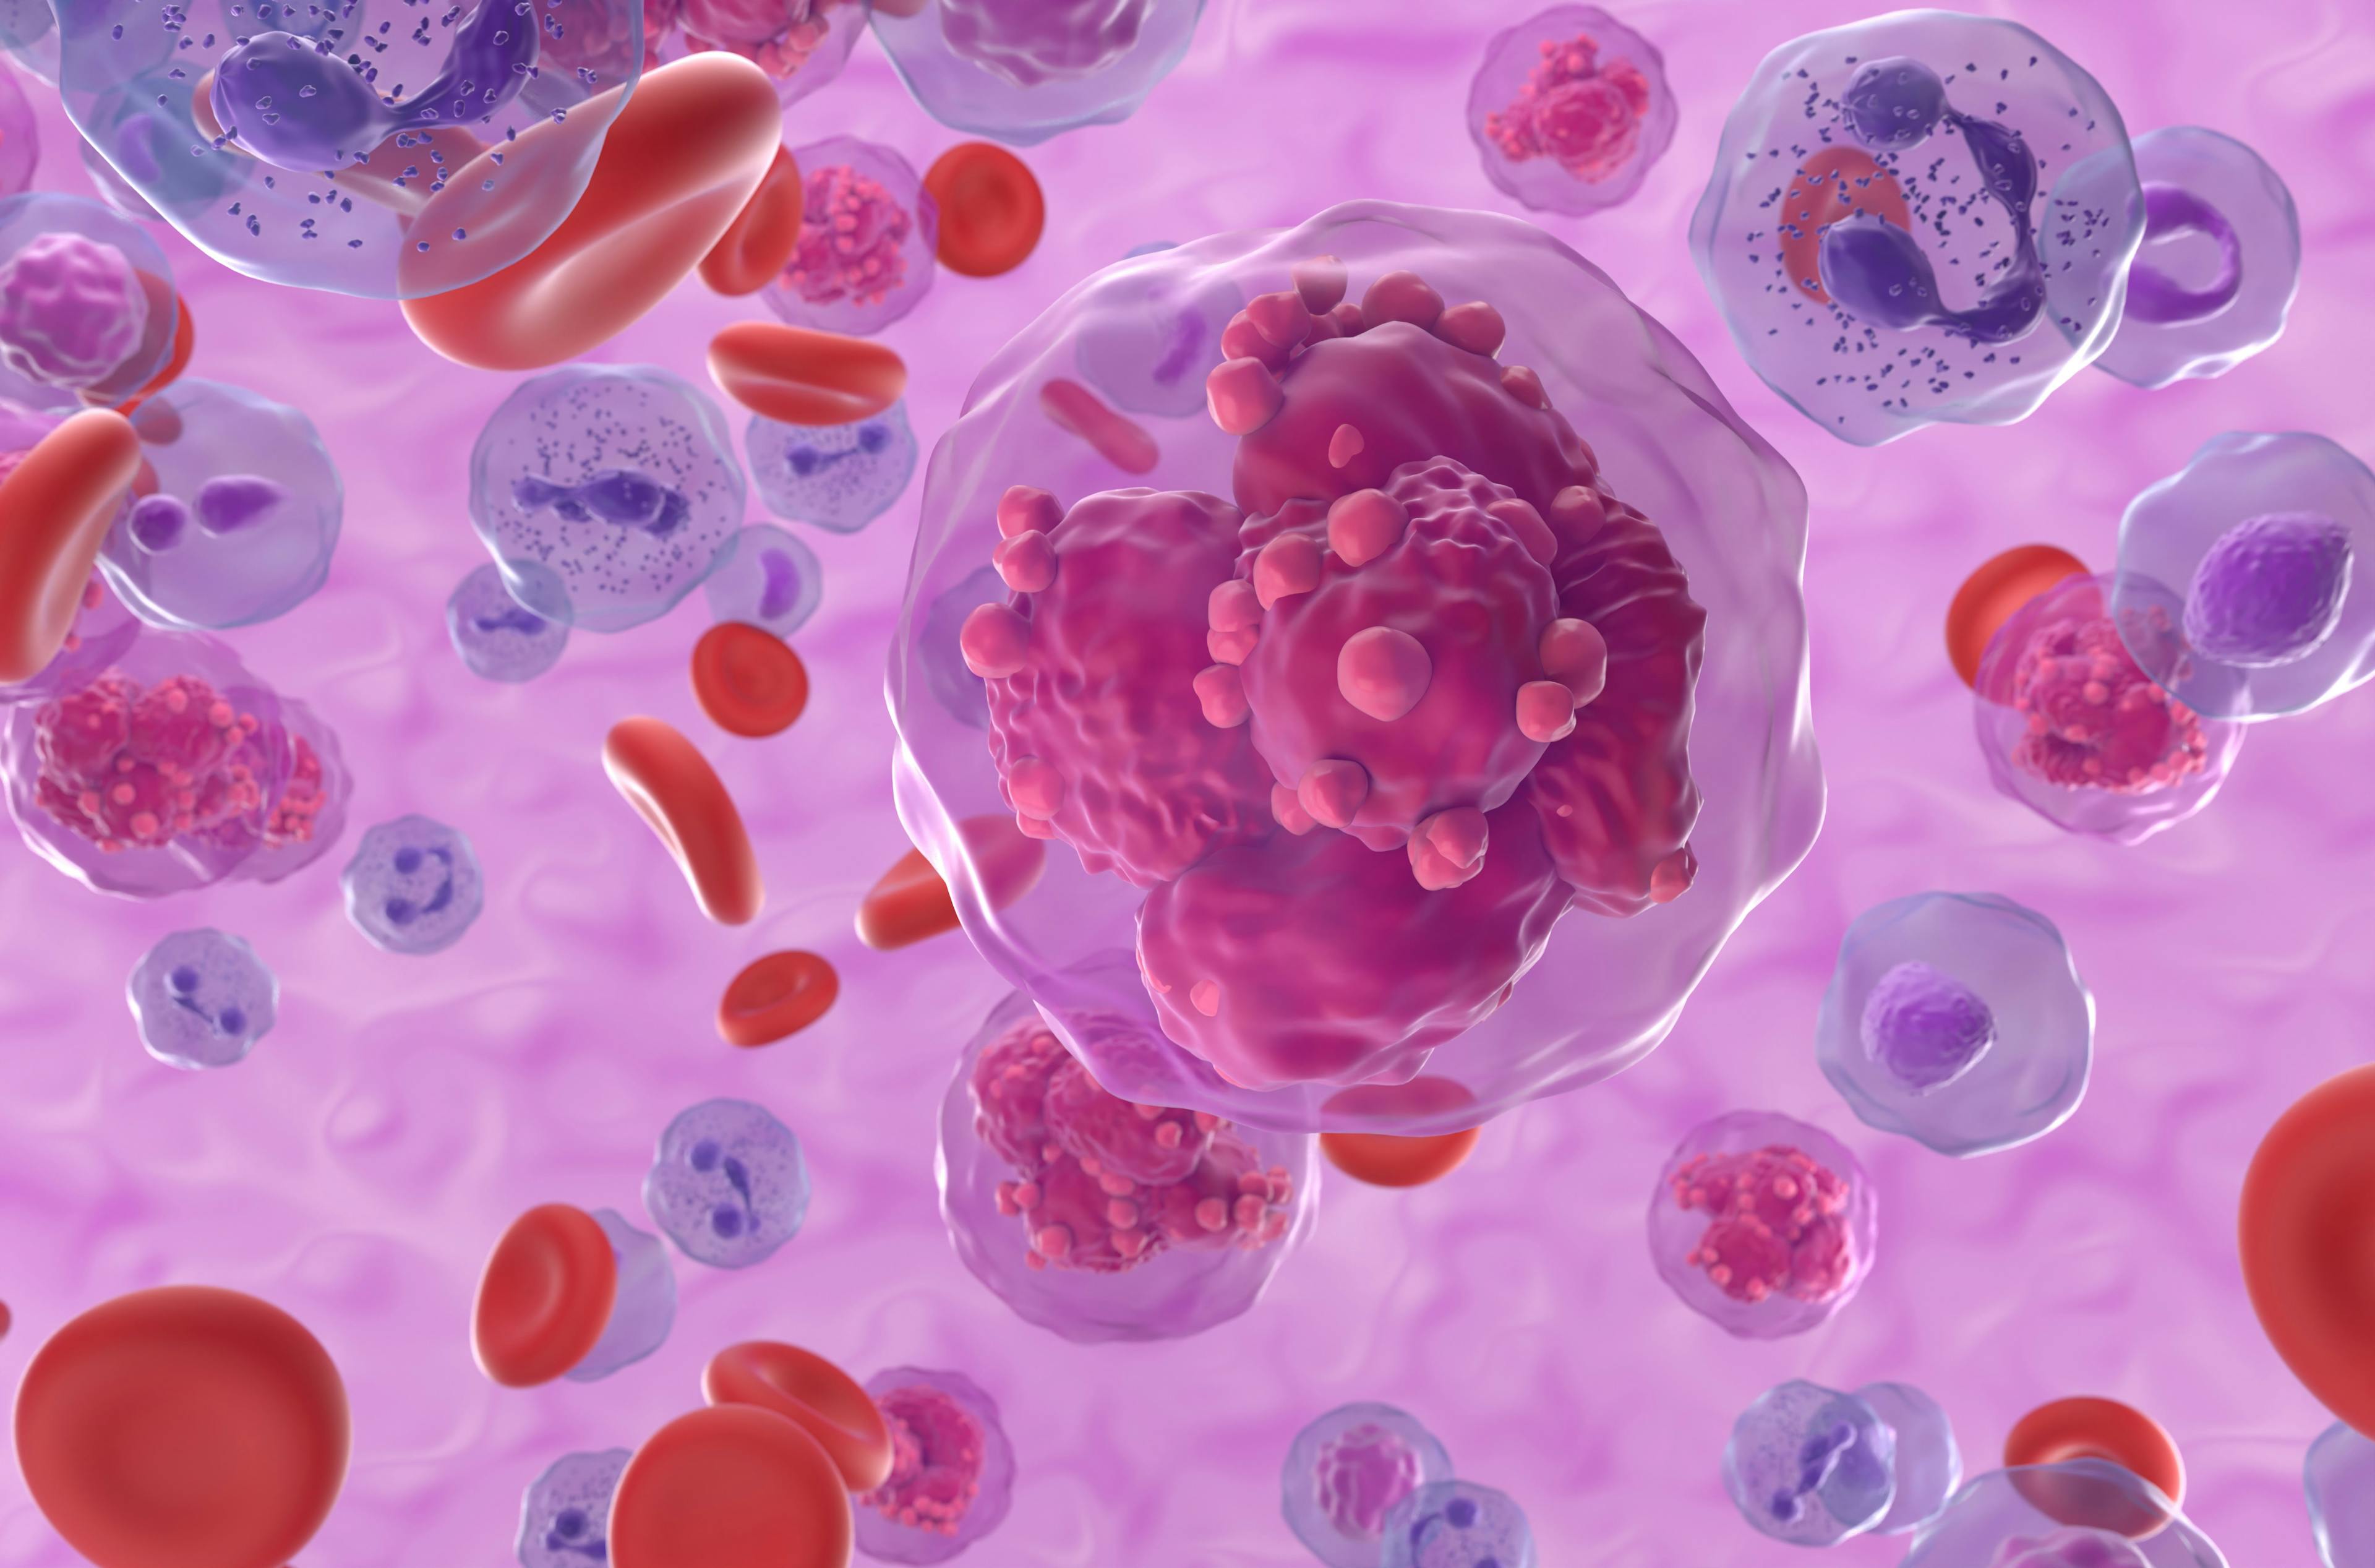 Acute lymphoblastic leukemia (ALL) cancer cells in the blood flow - closeup view 3d illustration | Image Credit: © Laszlo - www.stock.adobe.com